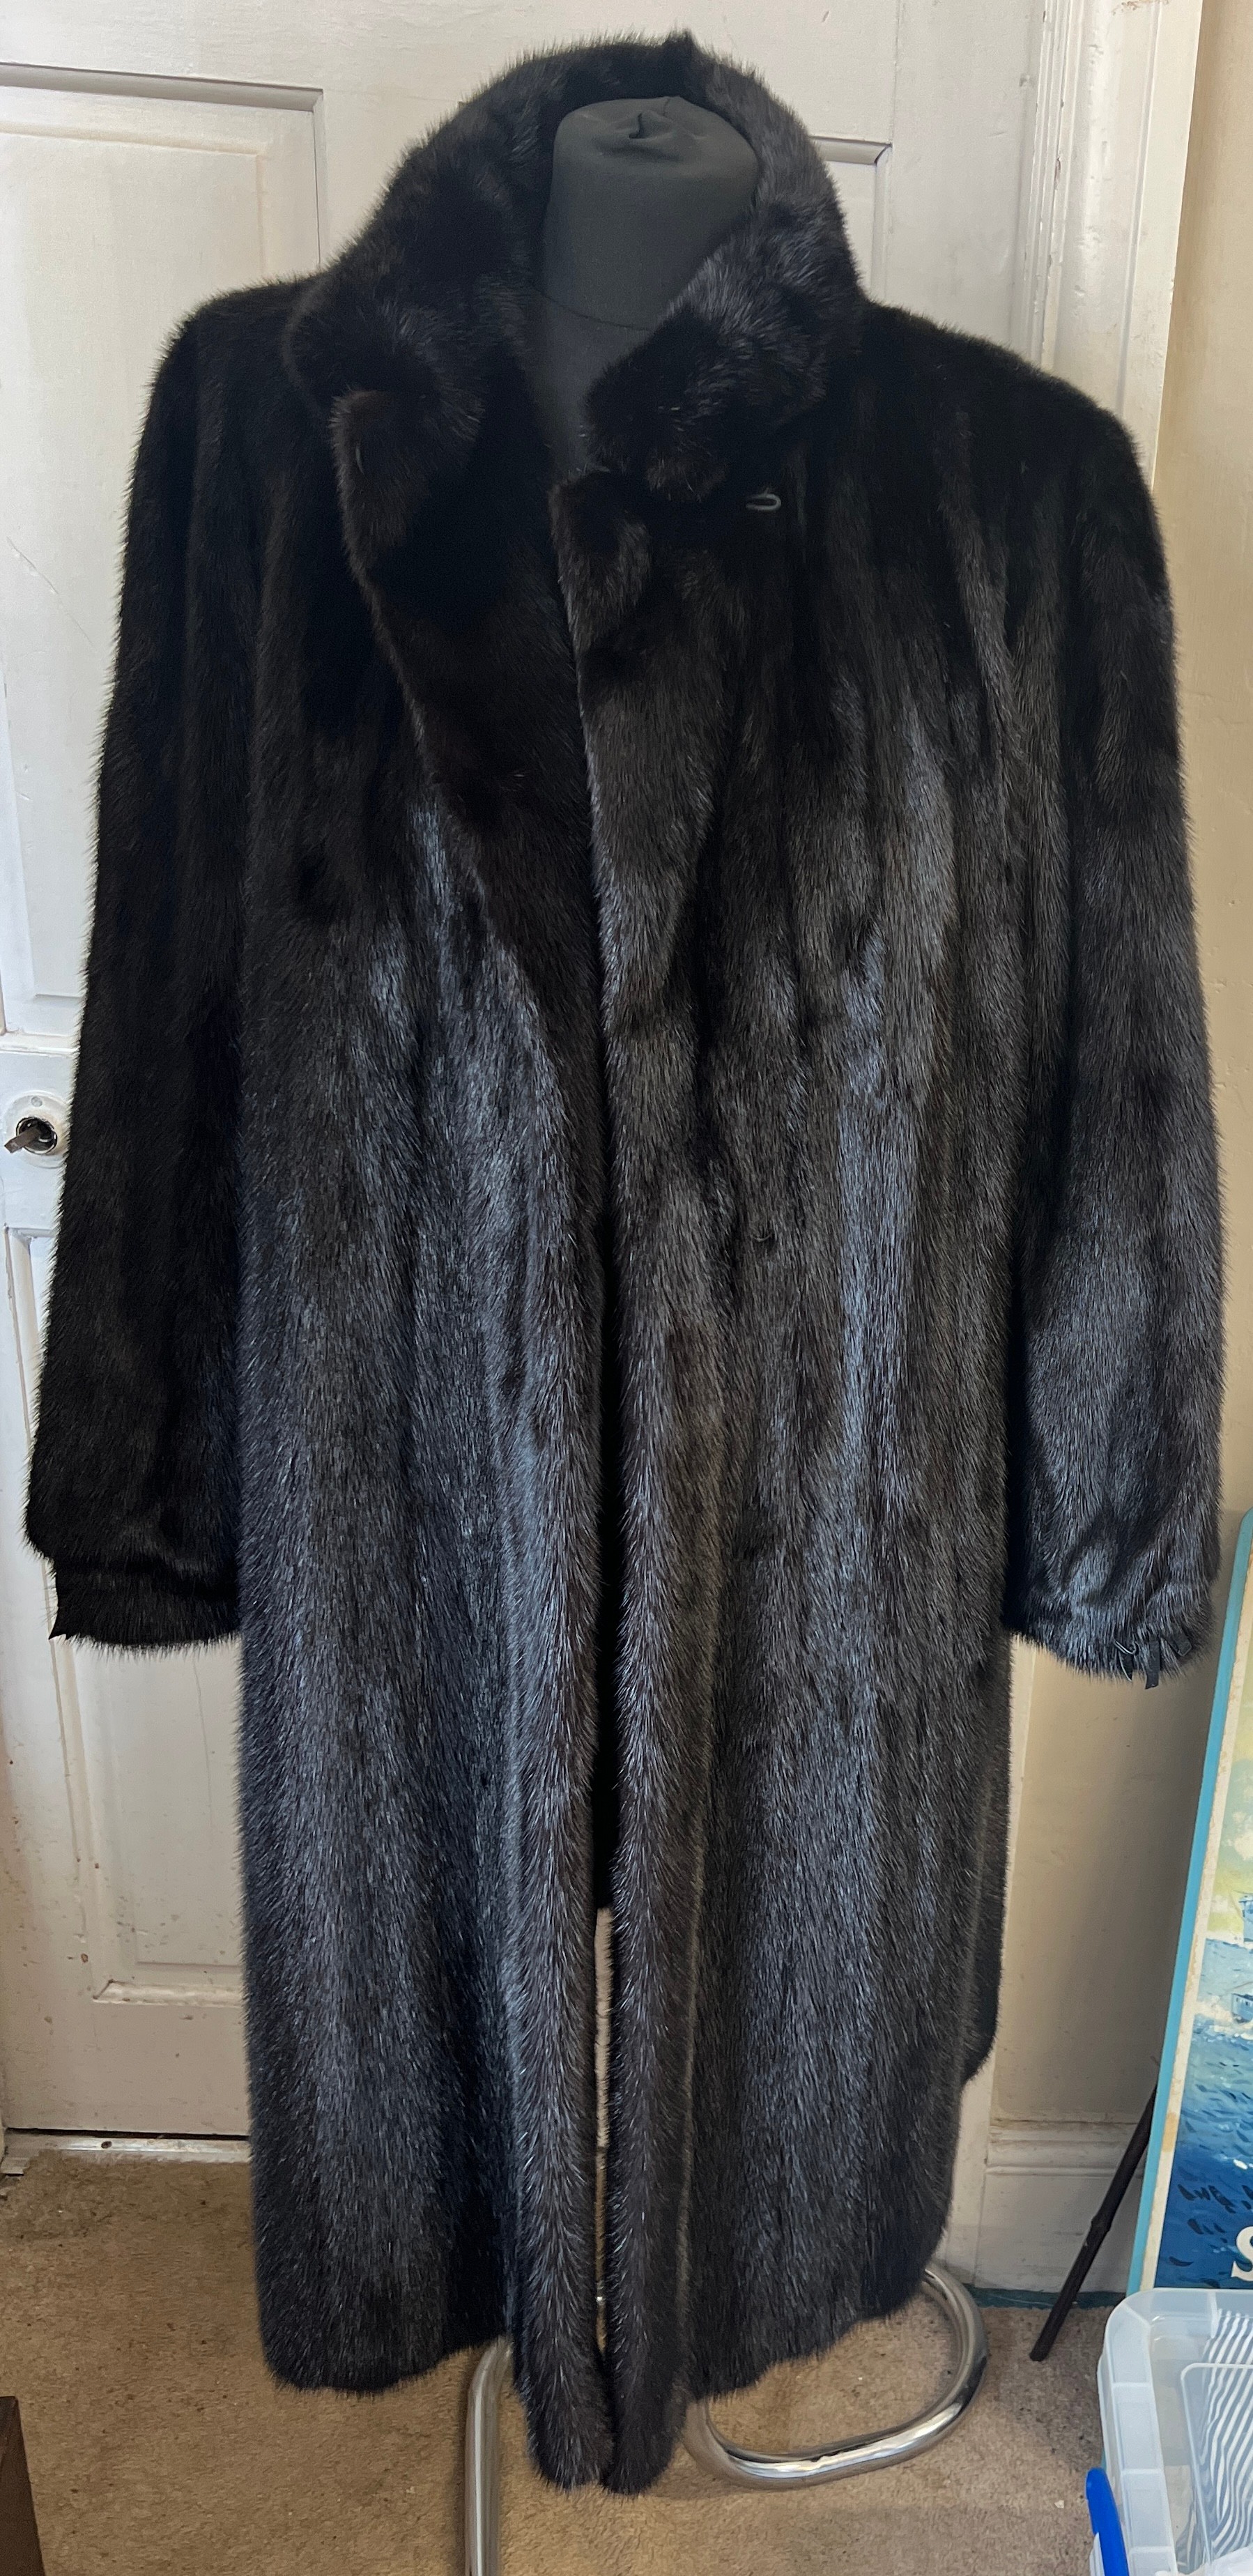 A long length black mink coat.